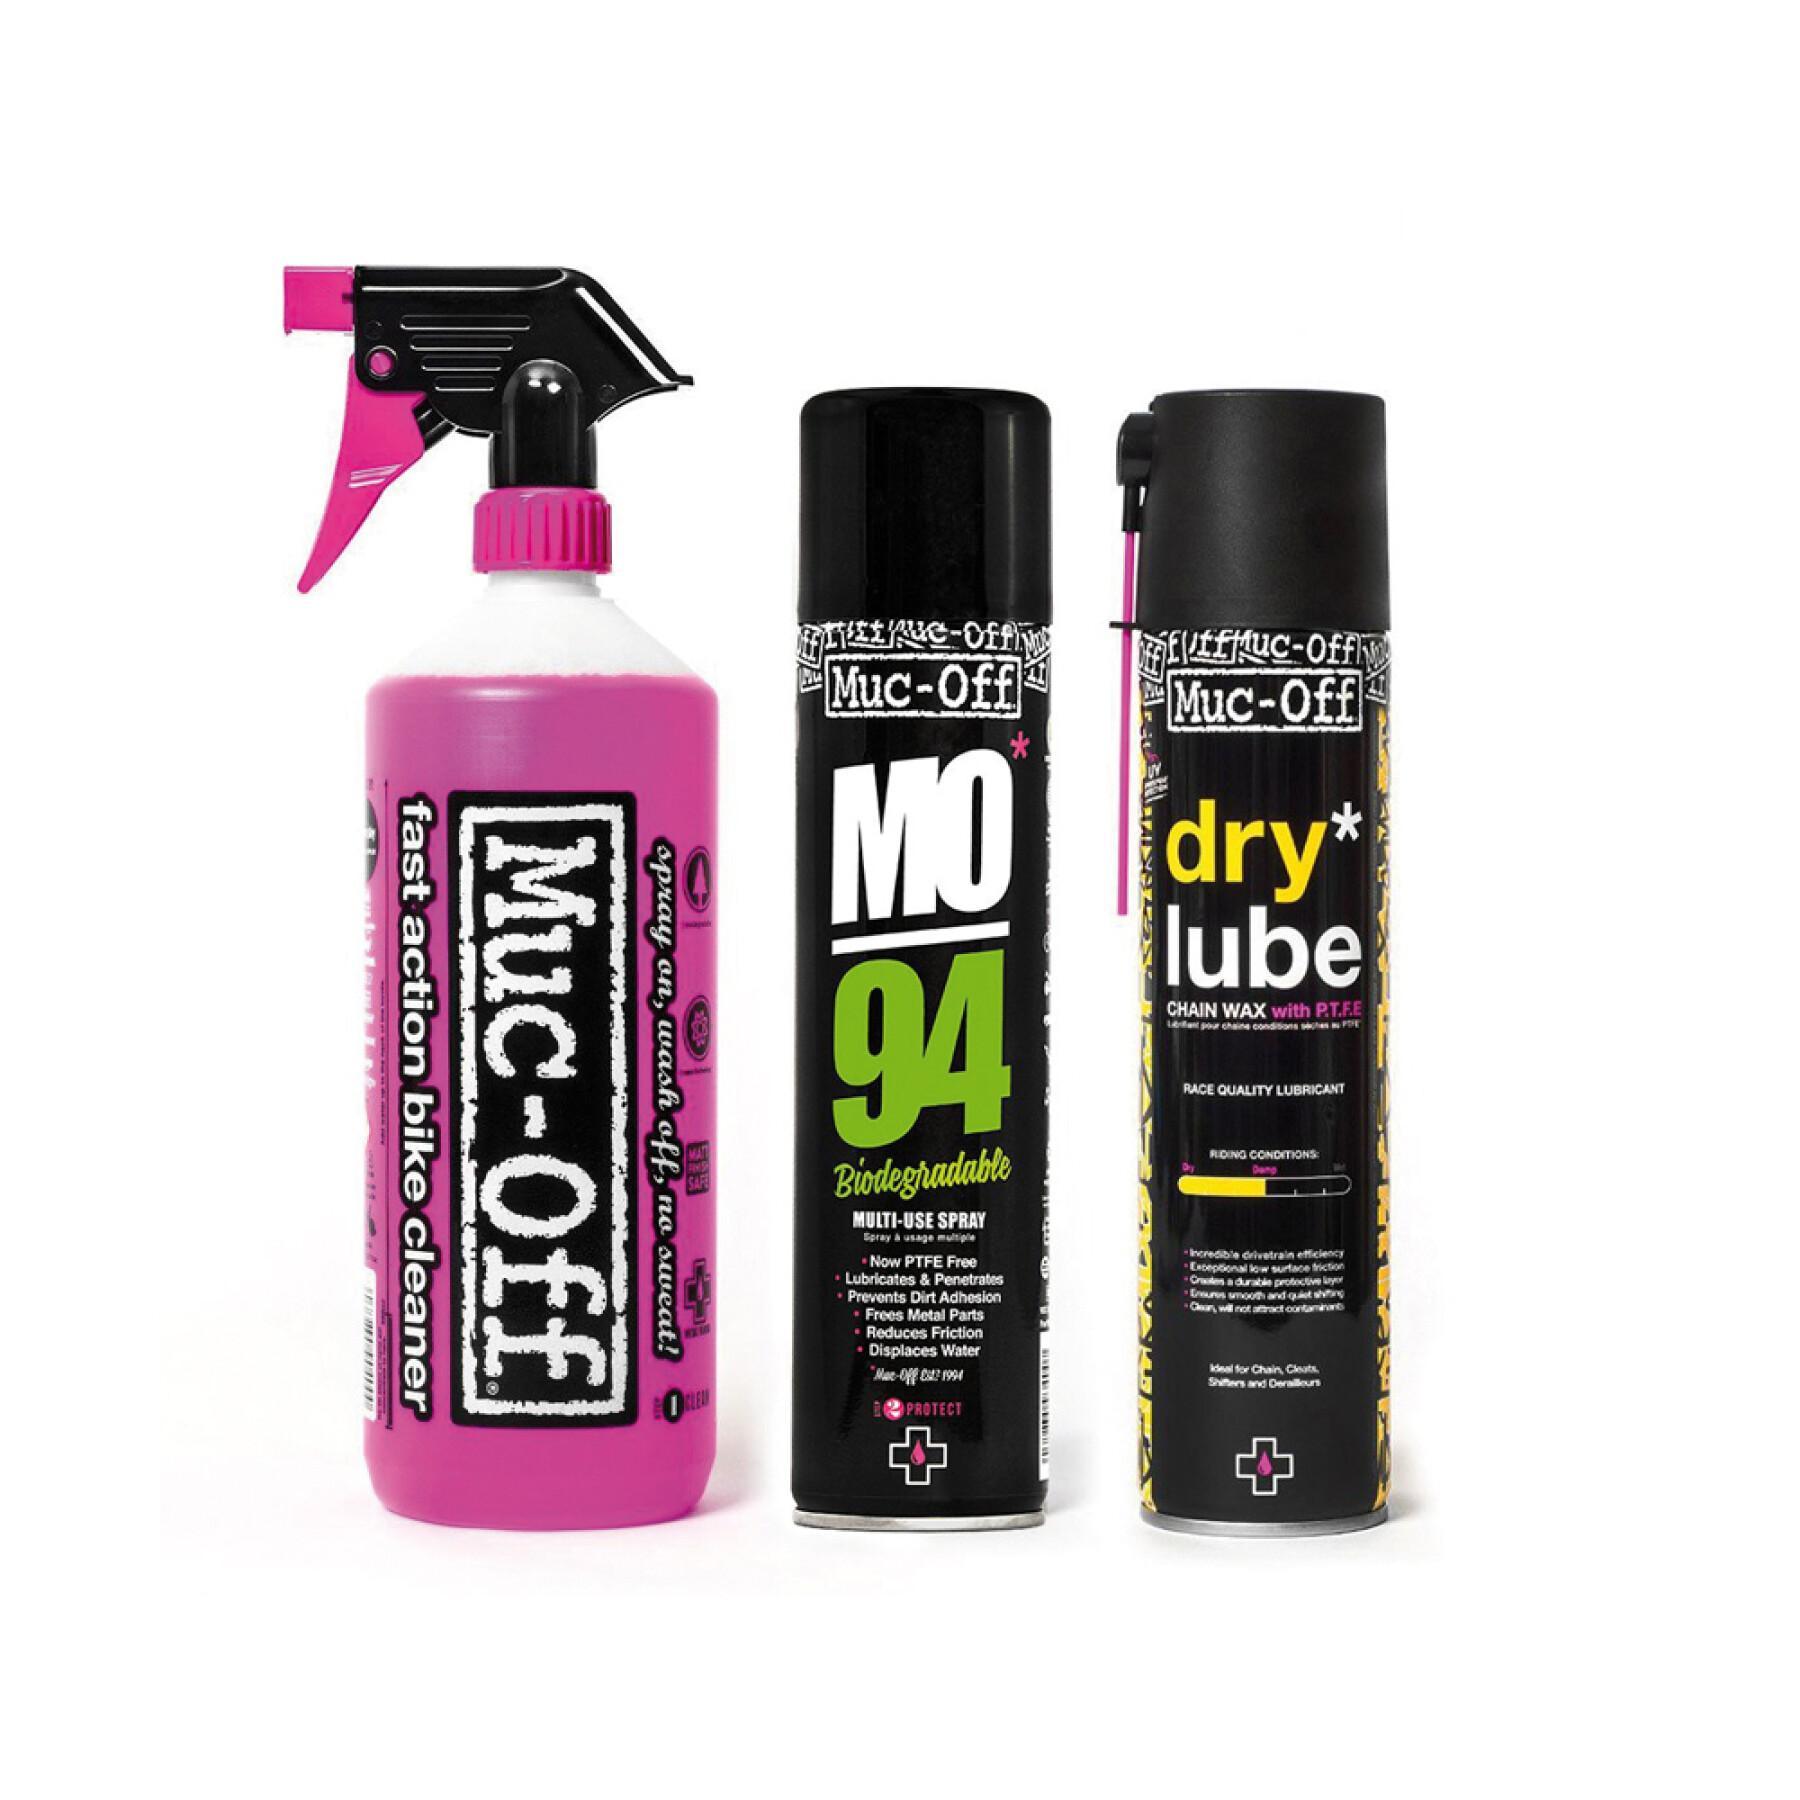 Reinigingspakket Muc-Off clean protect Lube kit wet